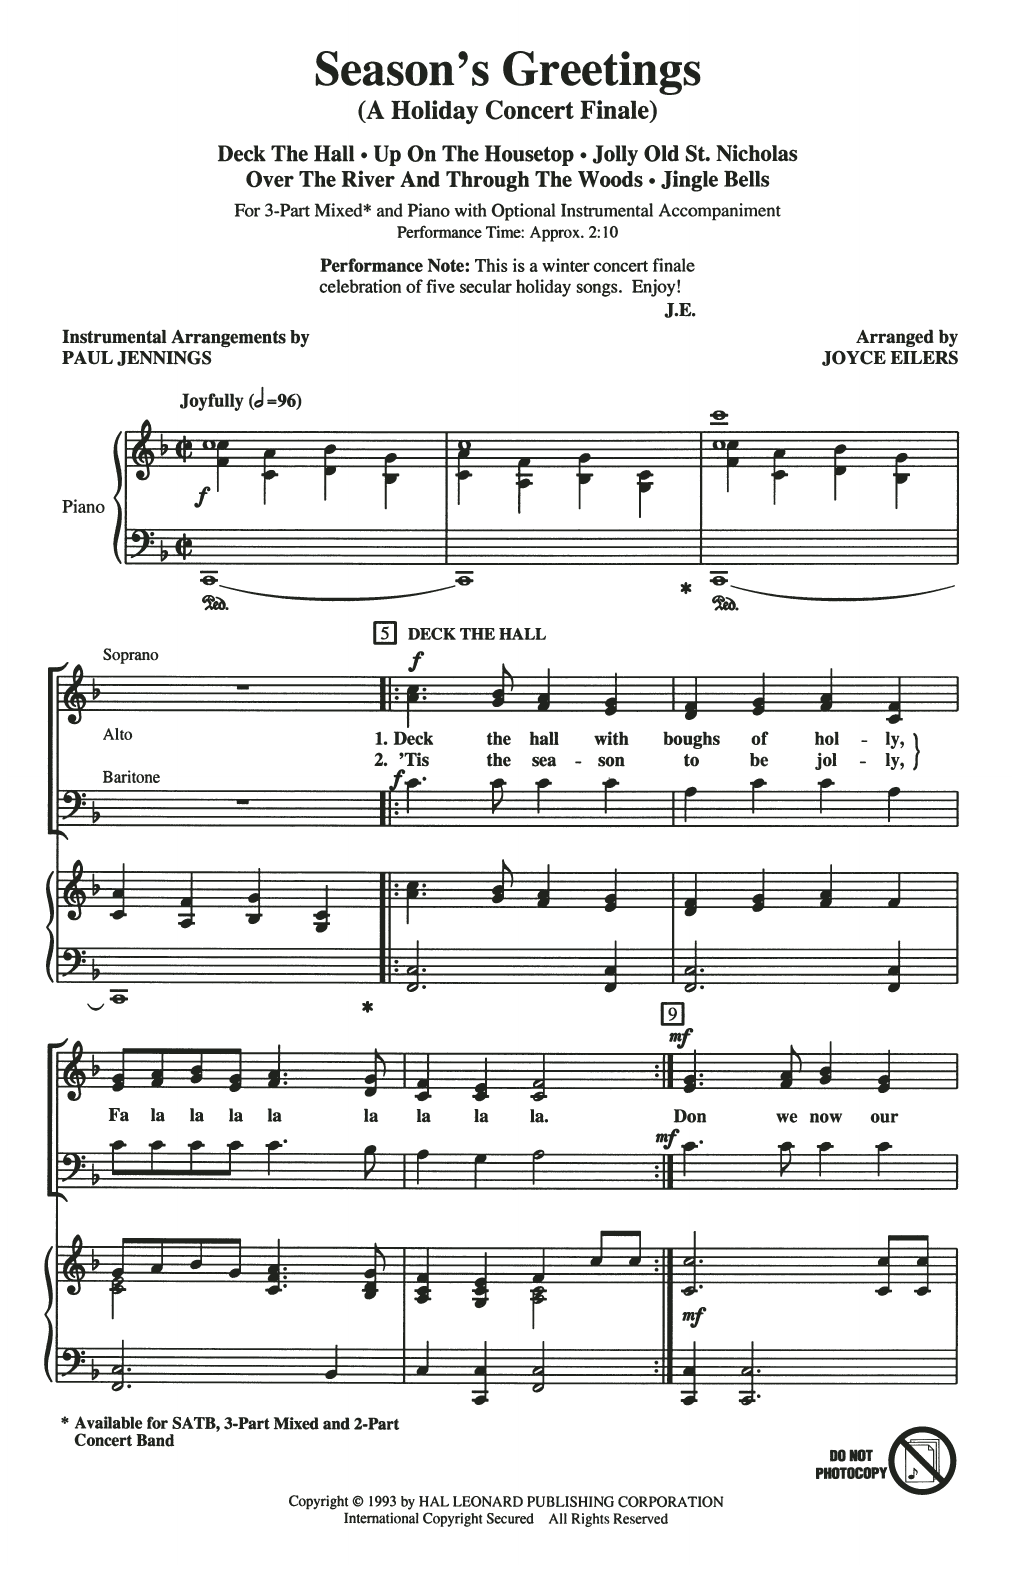 Joyce Eilers Season's Greetings (Medley) Sheet Music Notes & Chords for SATB Choir - Download or Print PDF